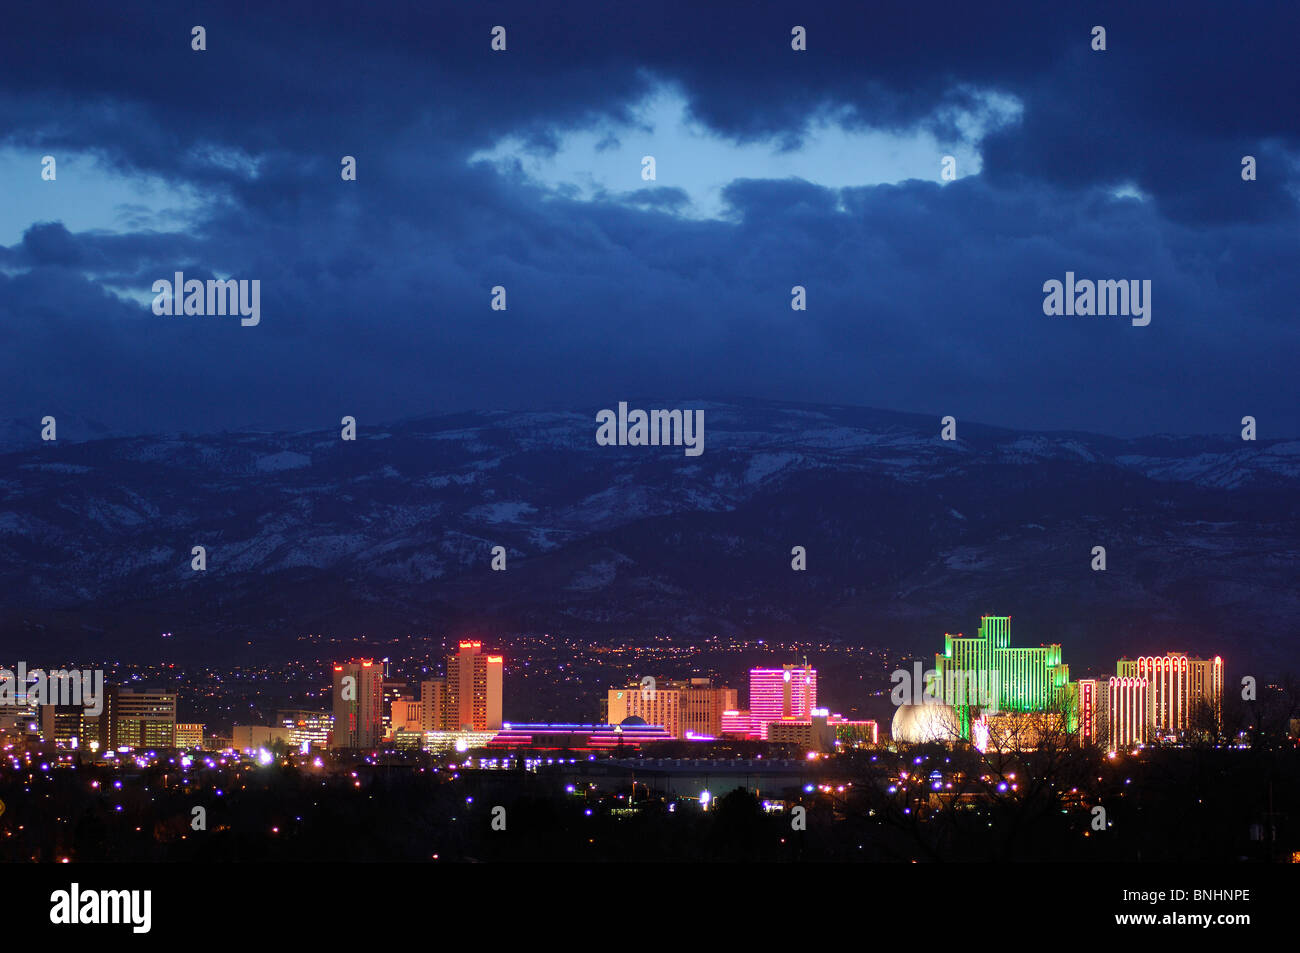 USA Las Vegas Nevada night lights city illuminated illumination mountains clouds landscape scenery Stock Photo